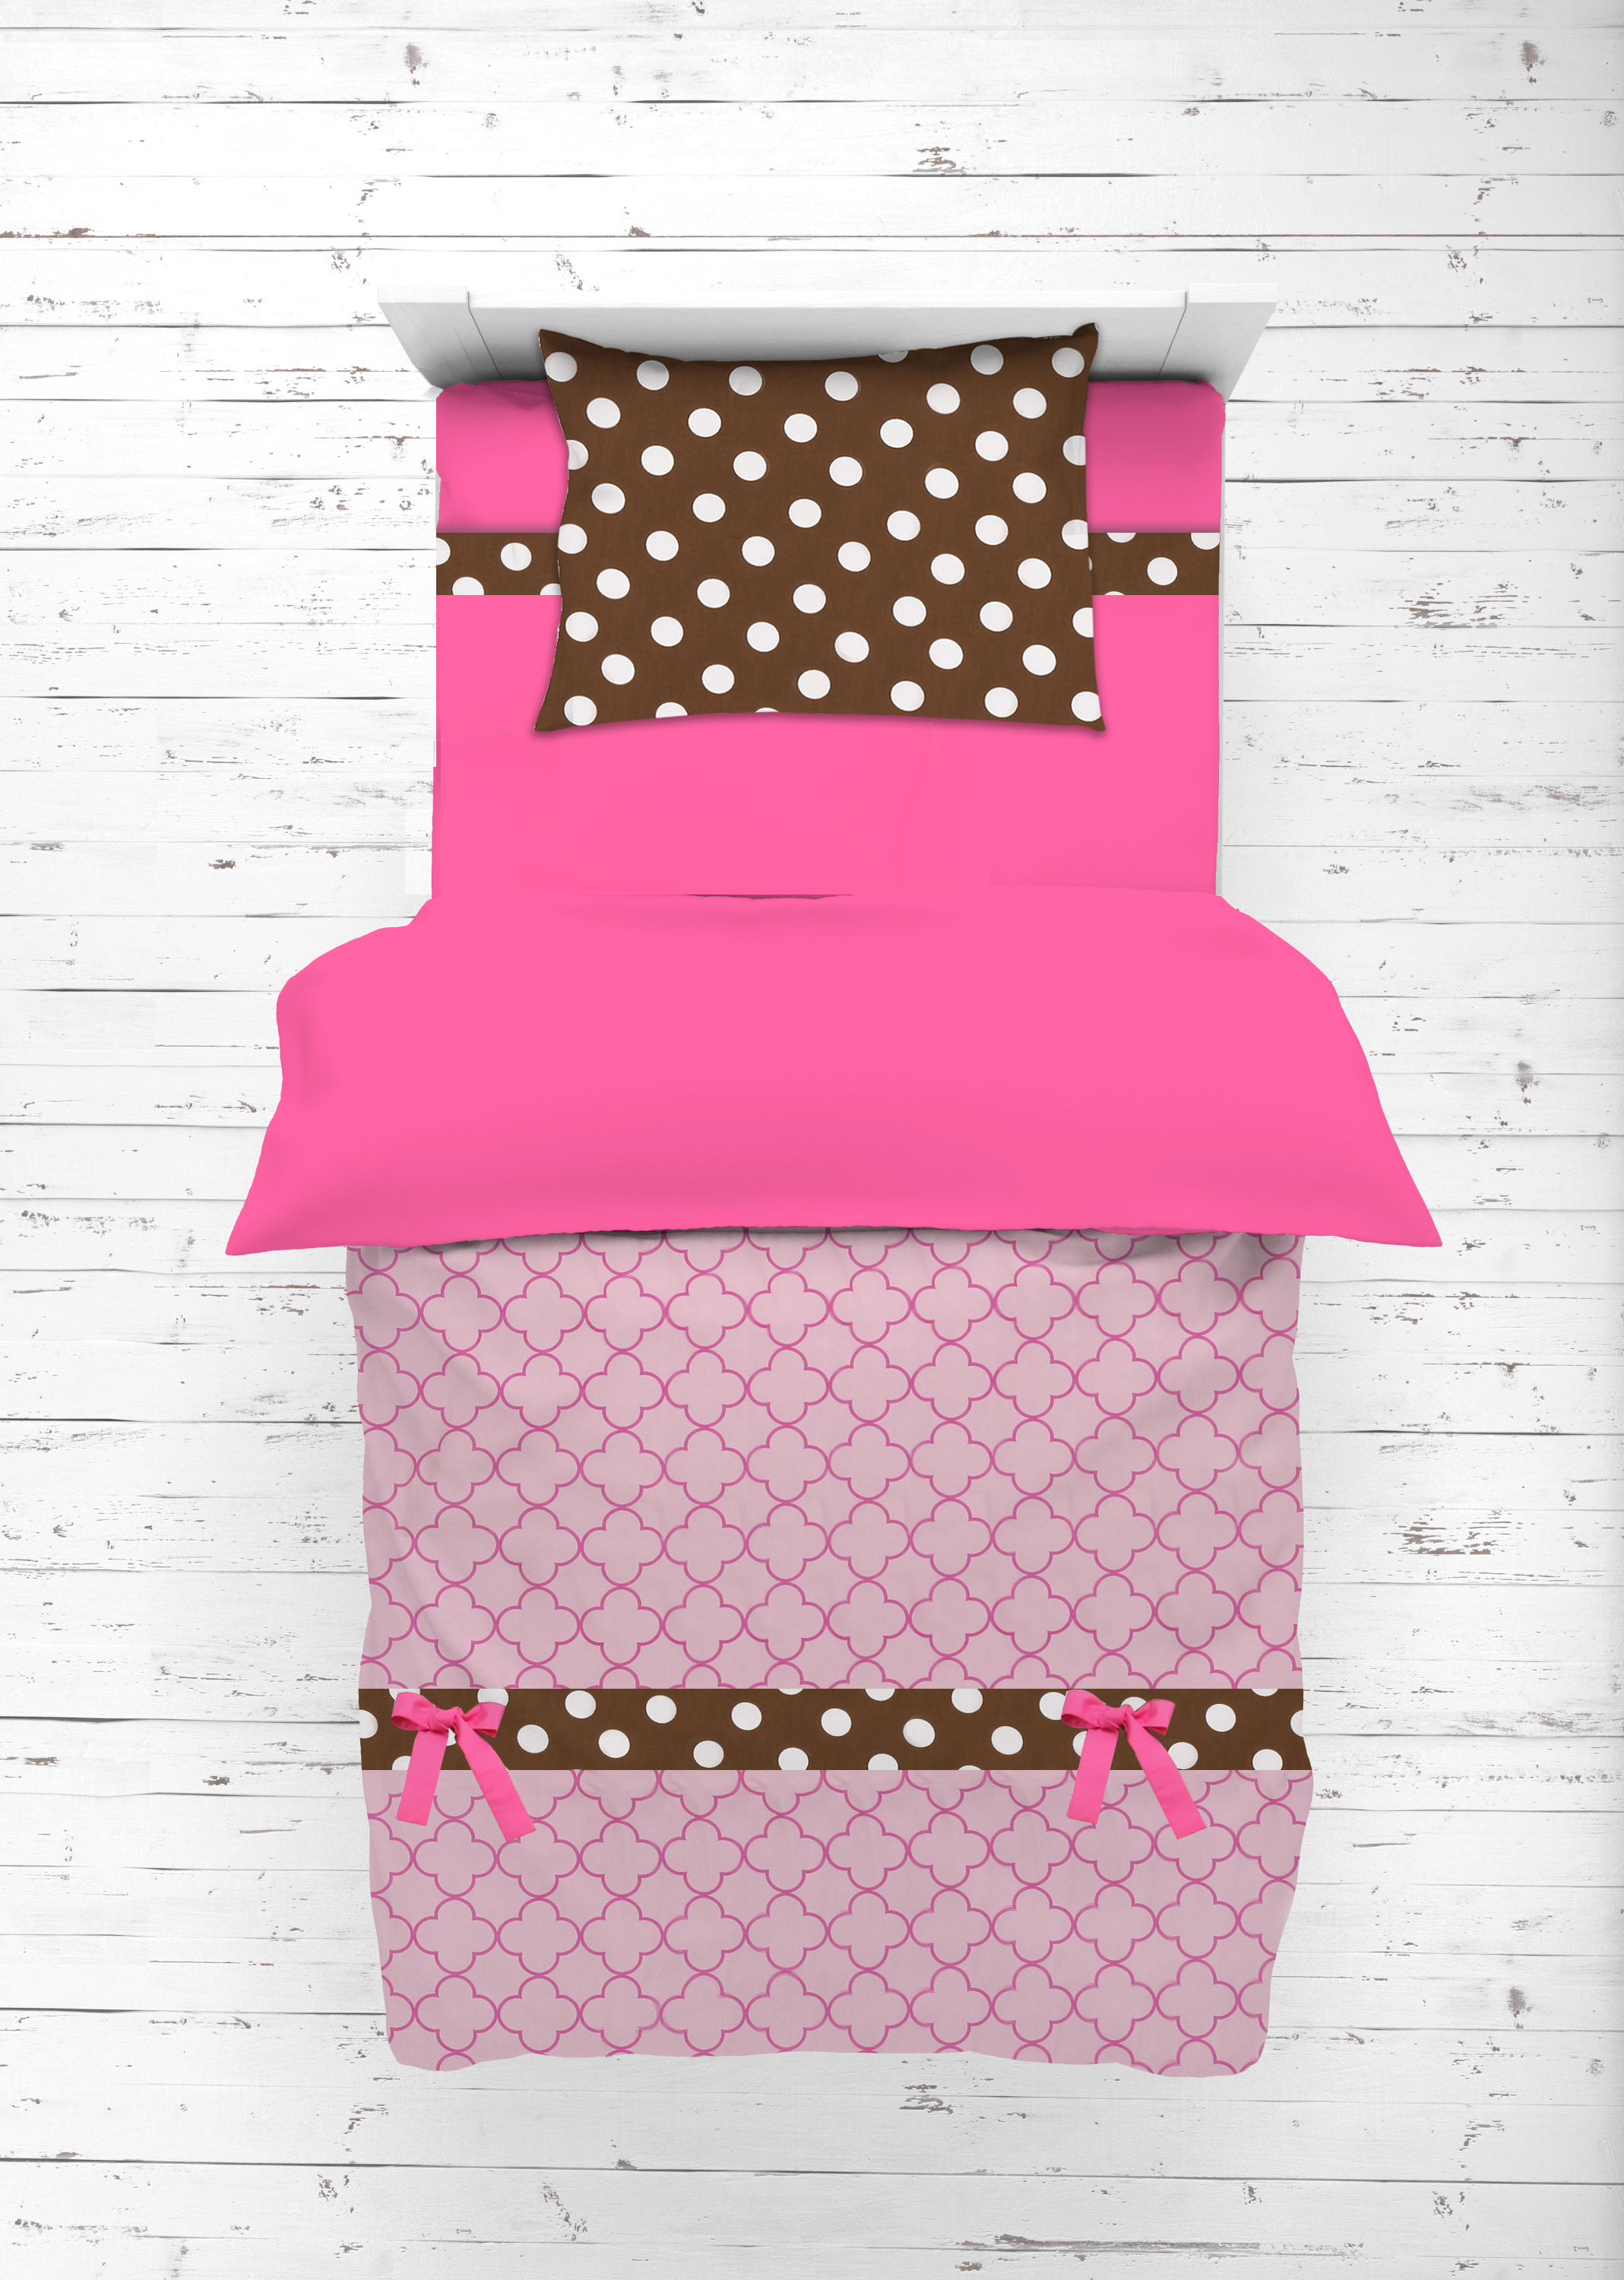 Bacati 4-Pc Toddler Bedding Set Butterflies Pink/Choc, 4.0 PIECE(S) - image 1 of 4